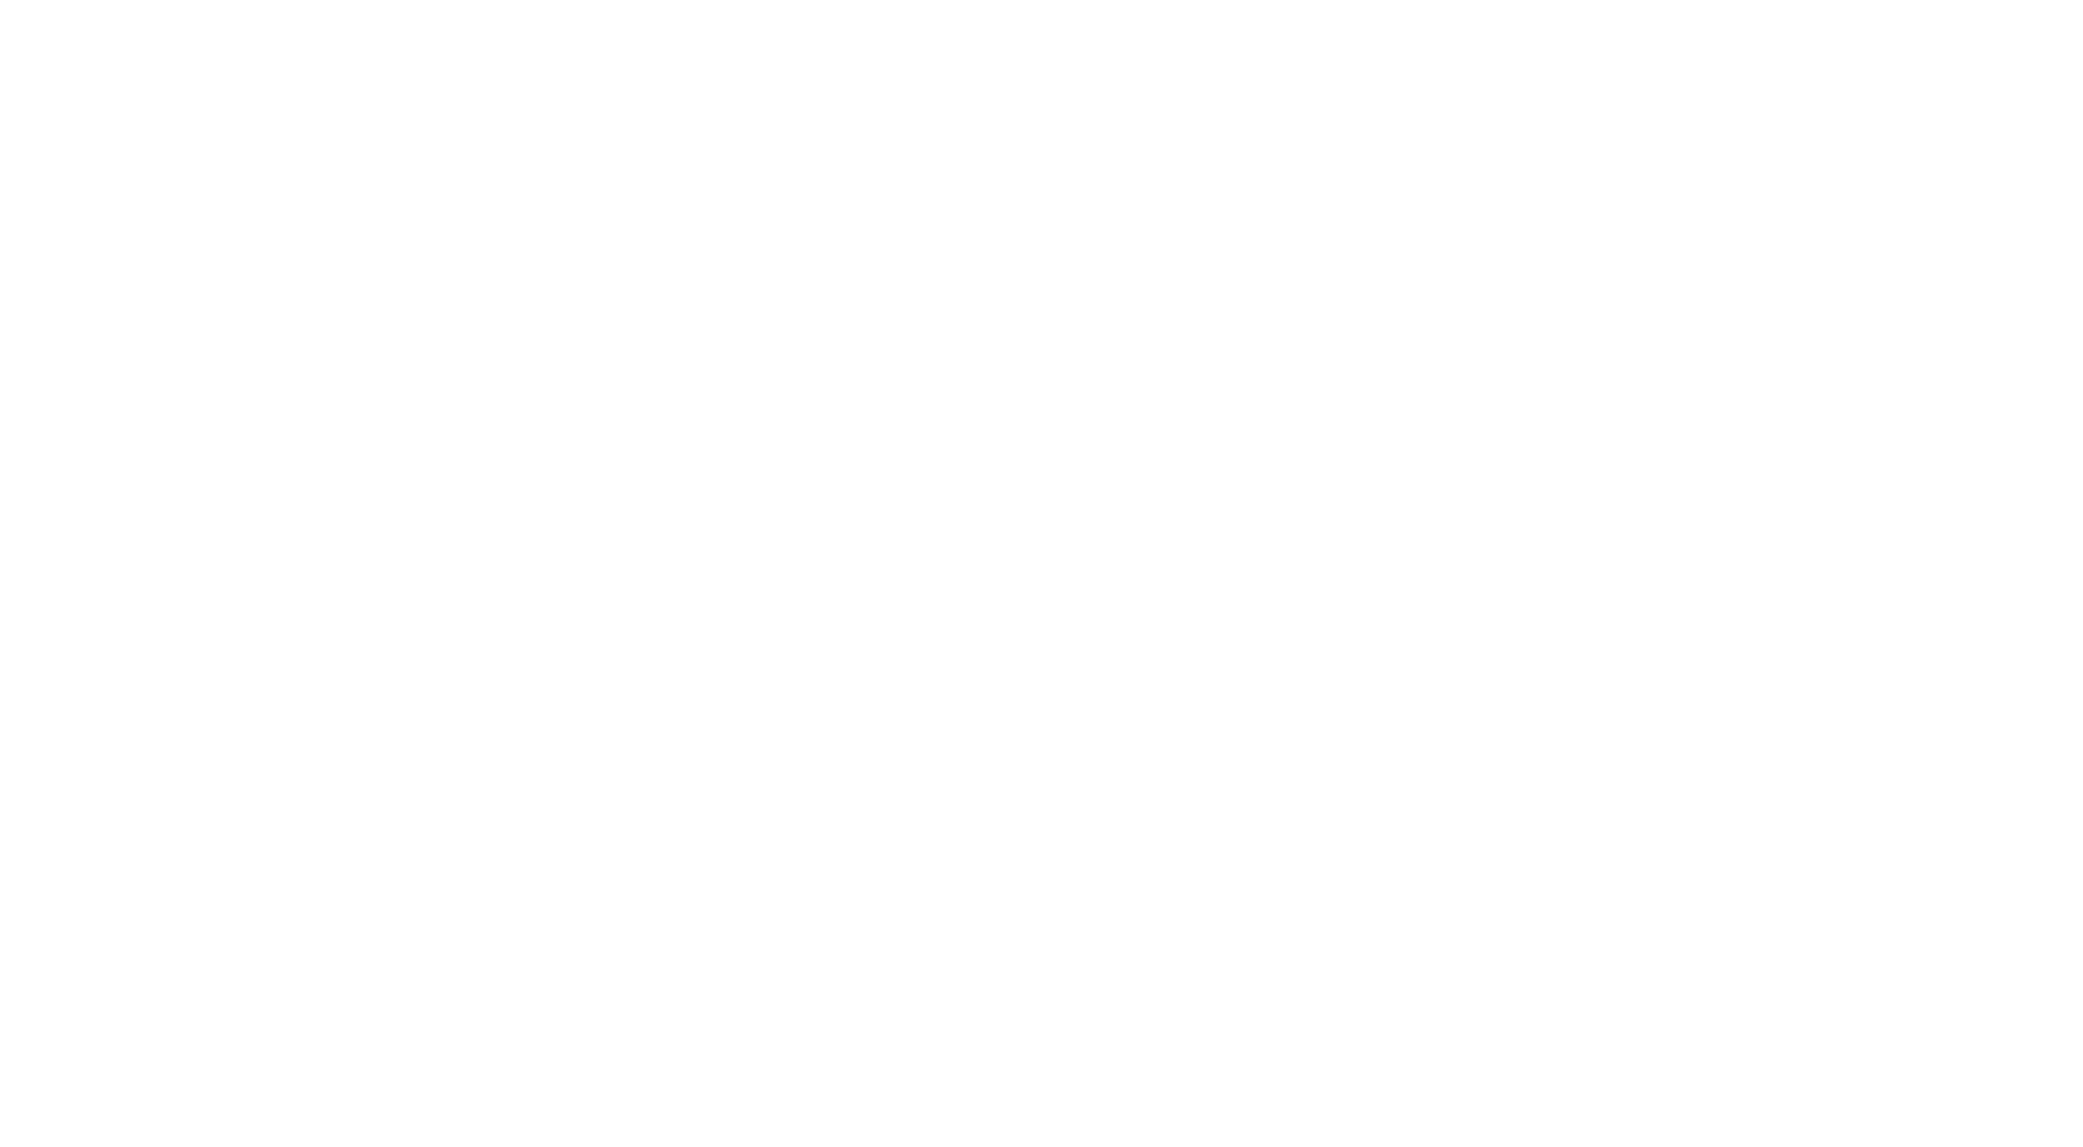 sartori 1980 logo